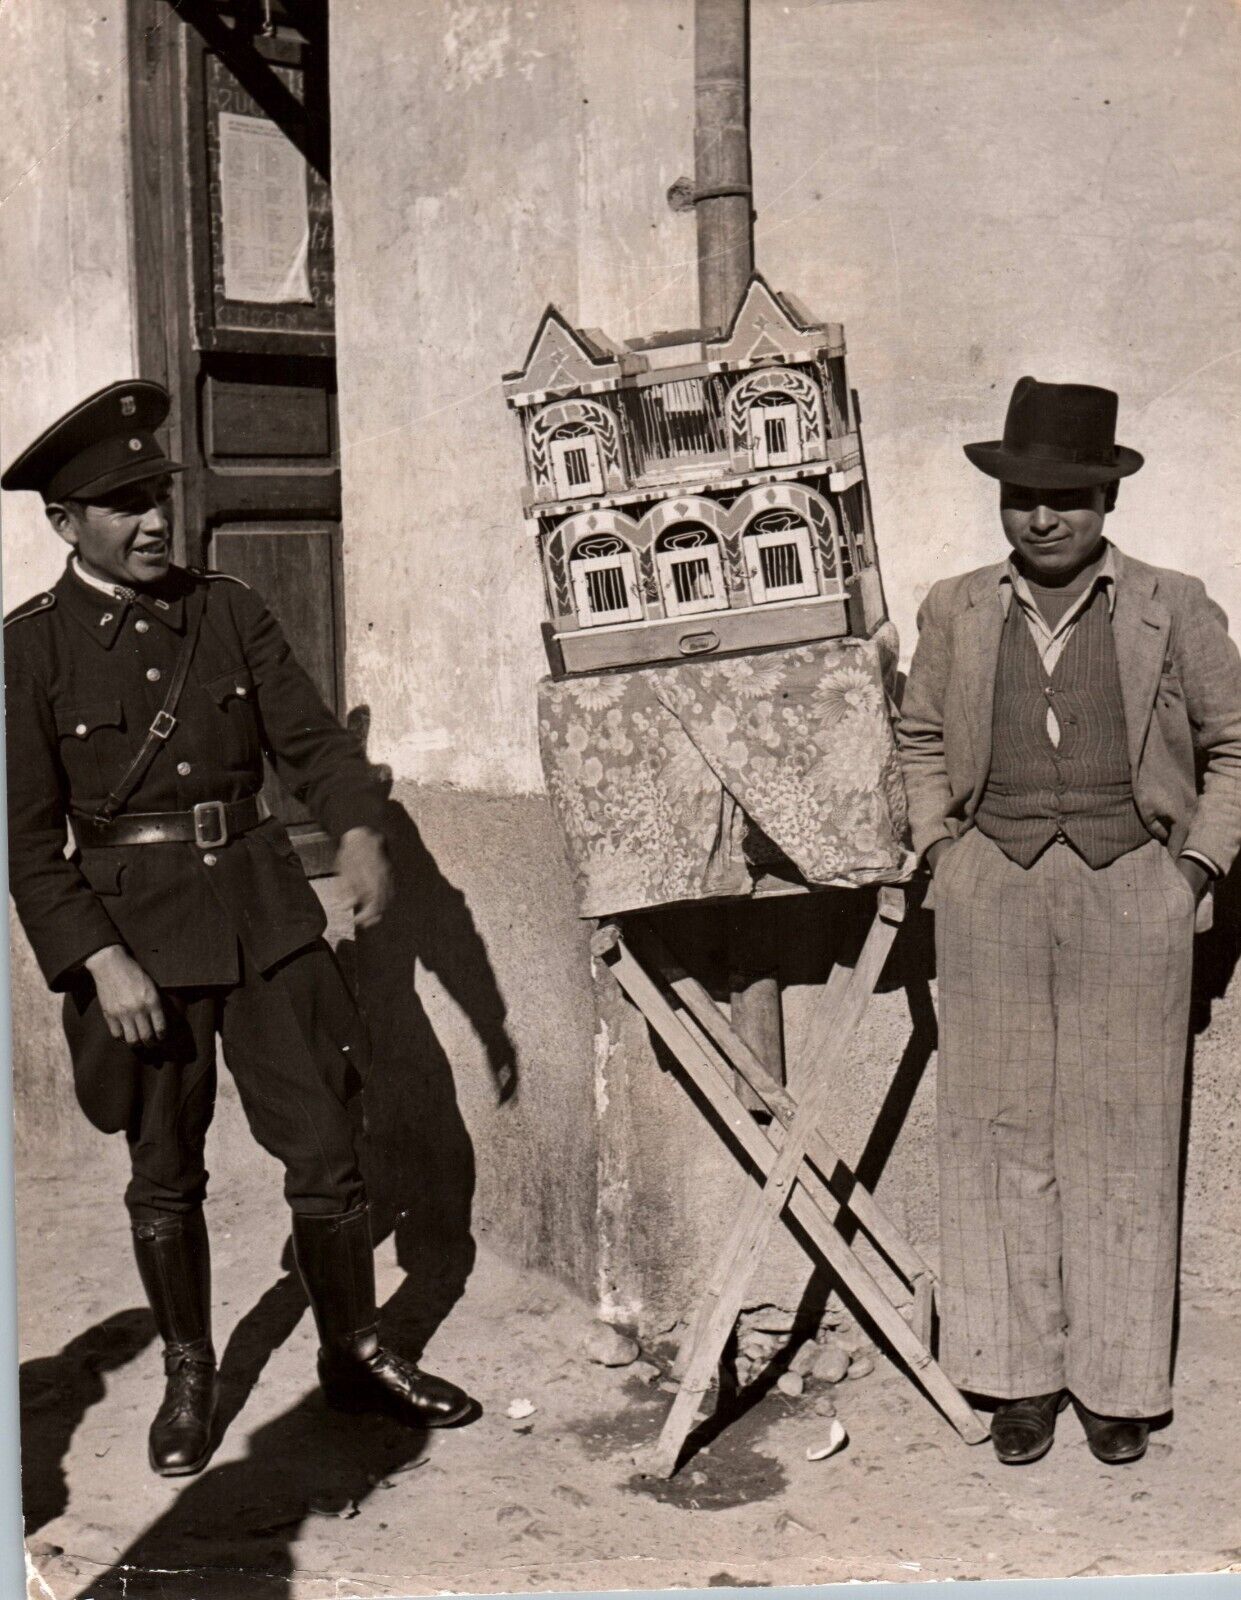 1930s BOLIVIA POLICE UNIFORM LA PAZ STREET SCENE VENDOR VINTAGE ORIG PHOTO 759